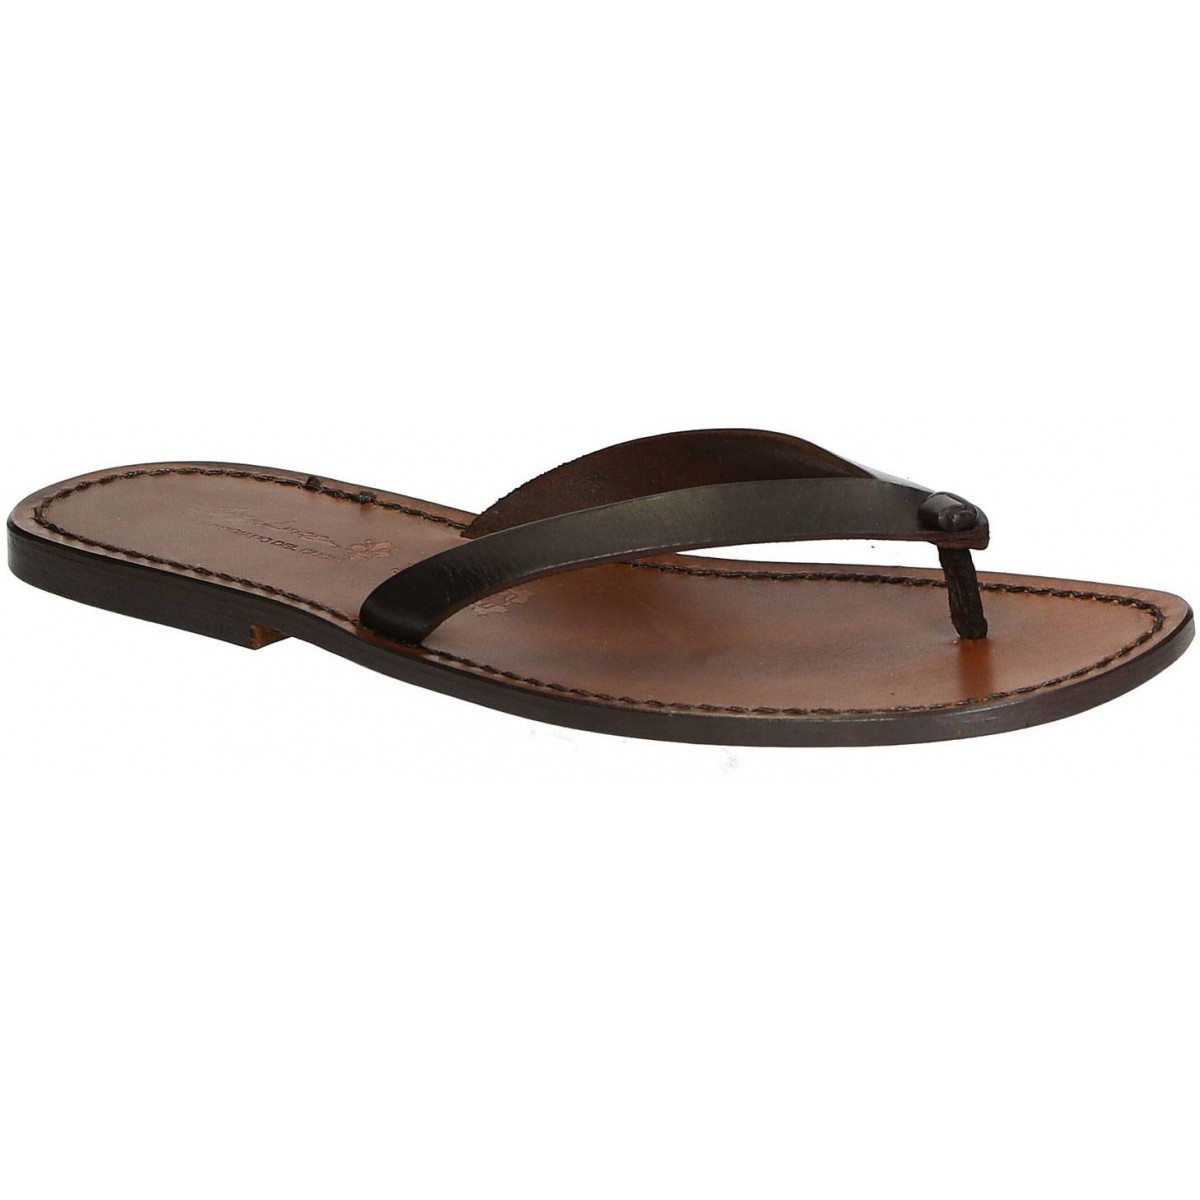 Dark brown leather thongs sandals for men Handmade | Gianluca - The ...